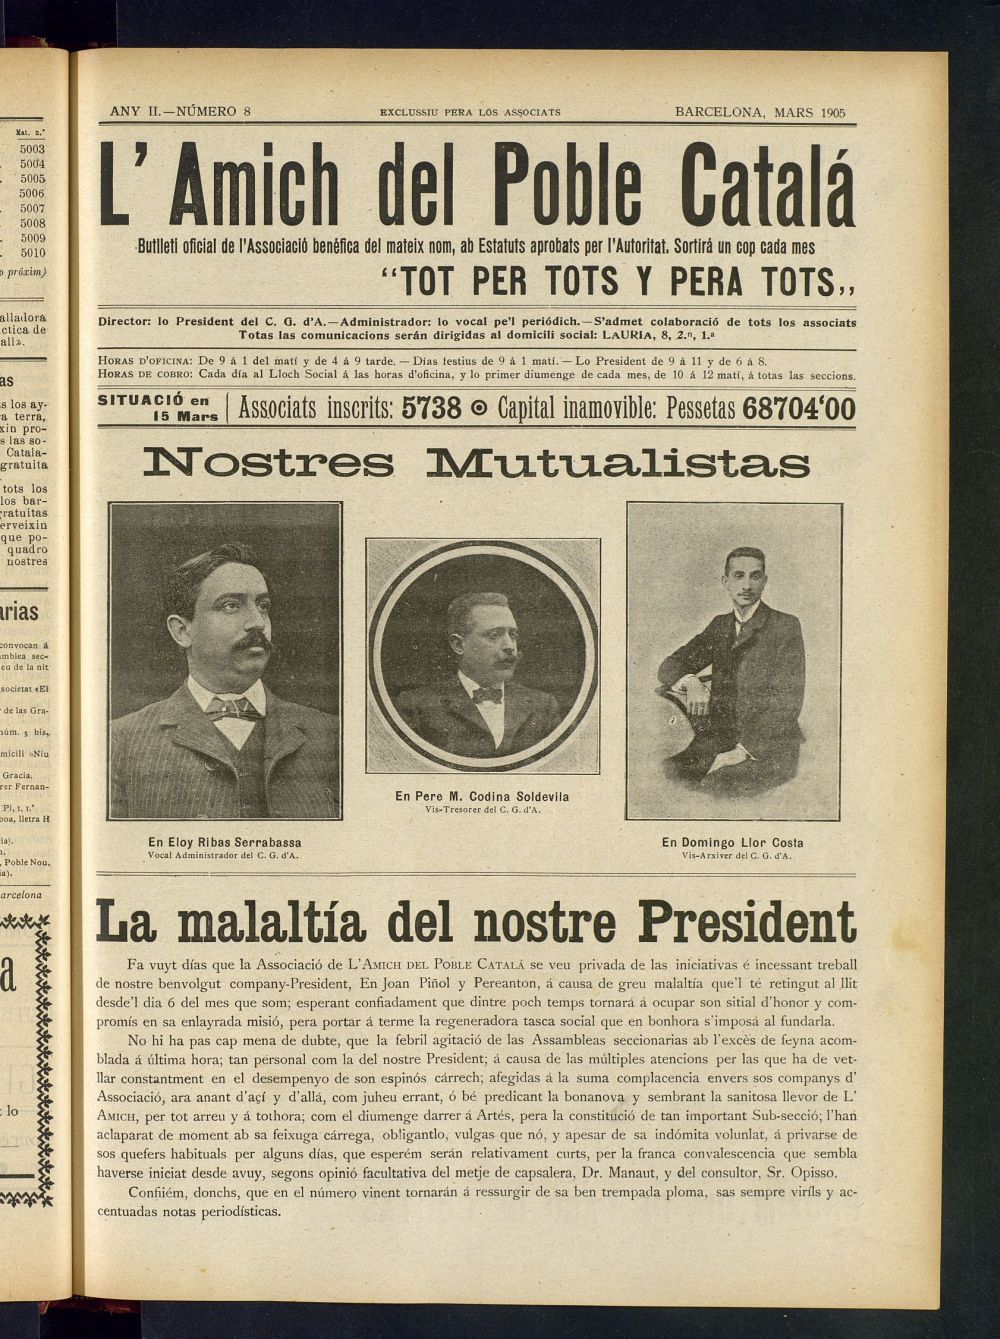 Lamich del poble catal: butllet oficial de lassociacio, ques publicara una volta cada mes de mars de 1905